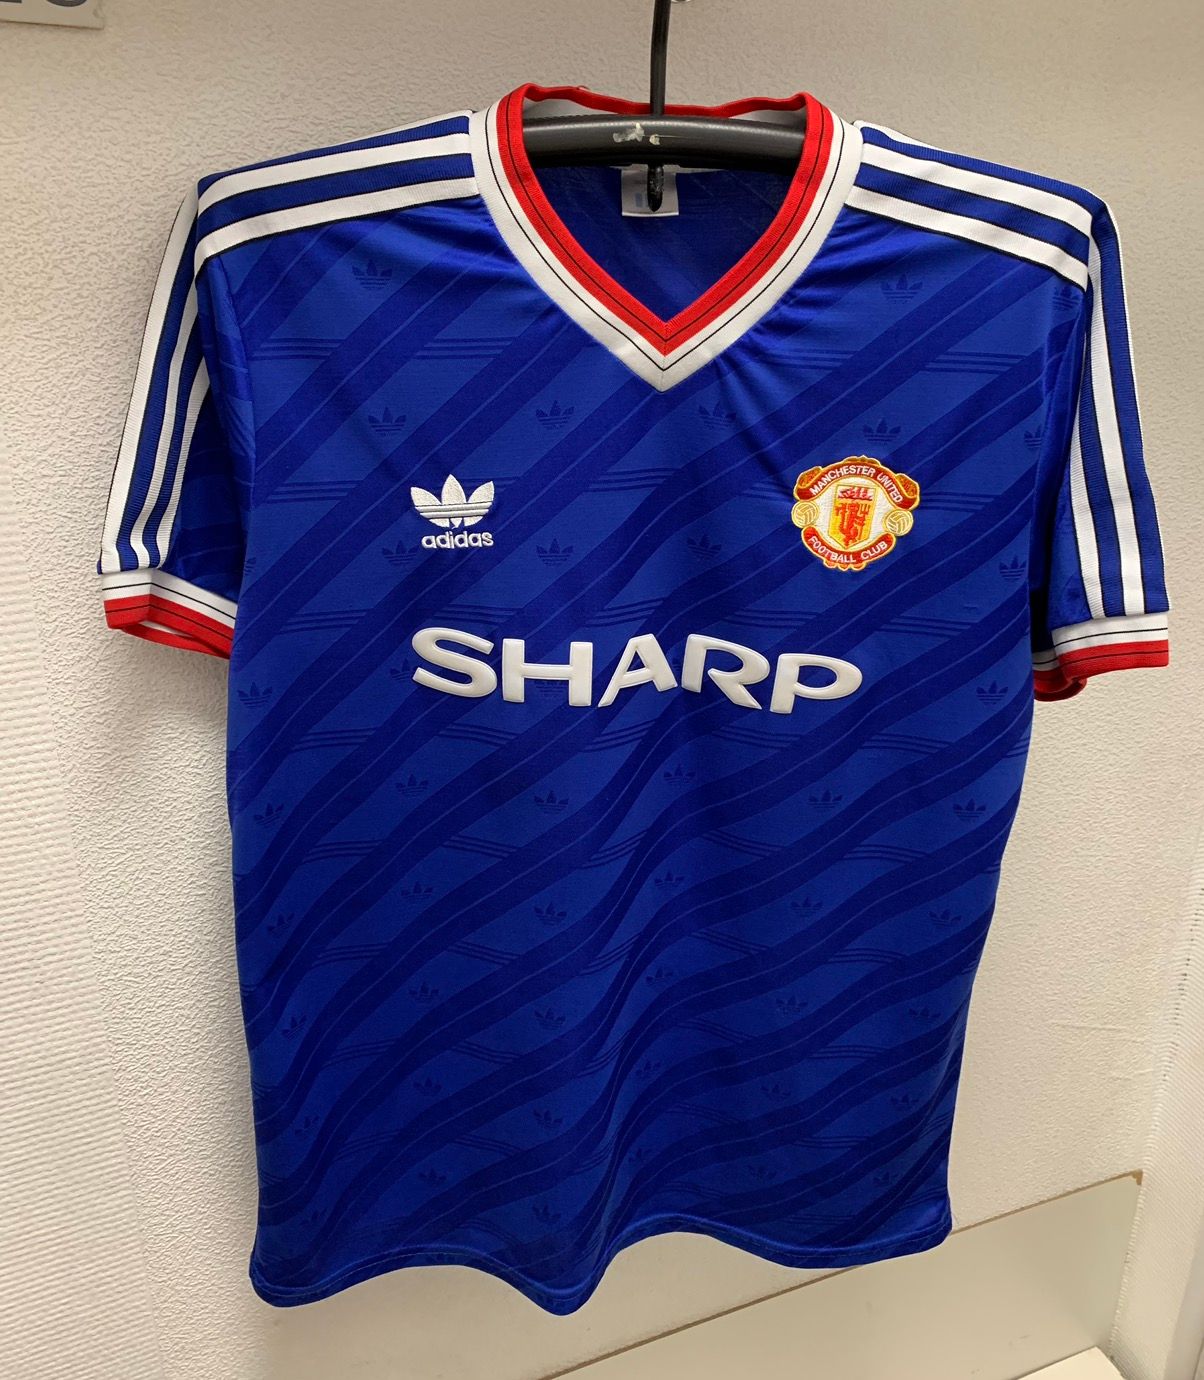 Adidas Manchester United adidas vintage soccer jersey sharp Xl